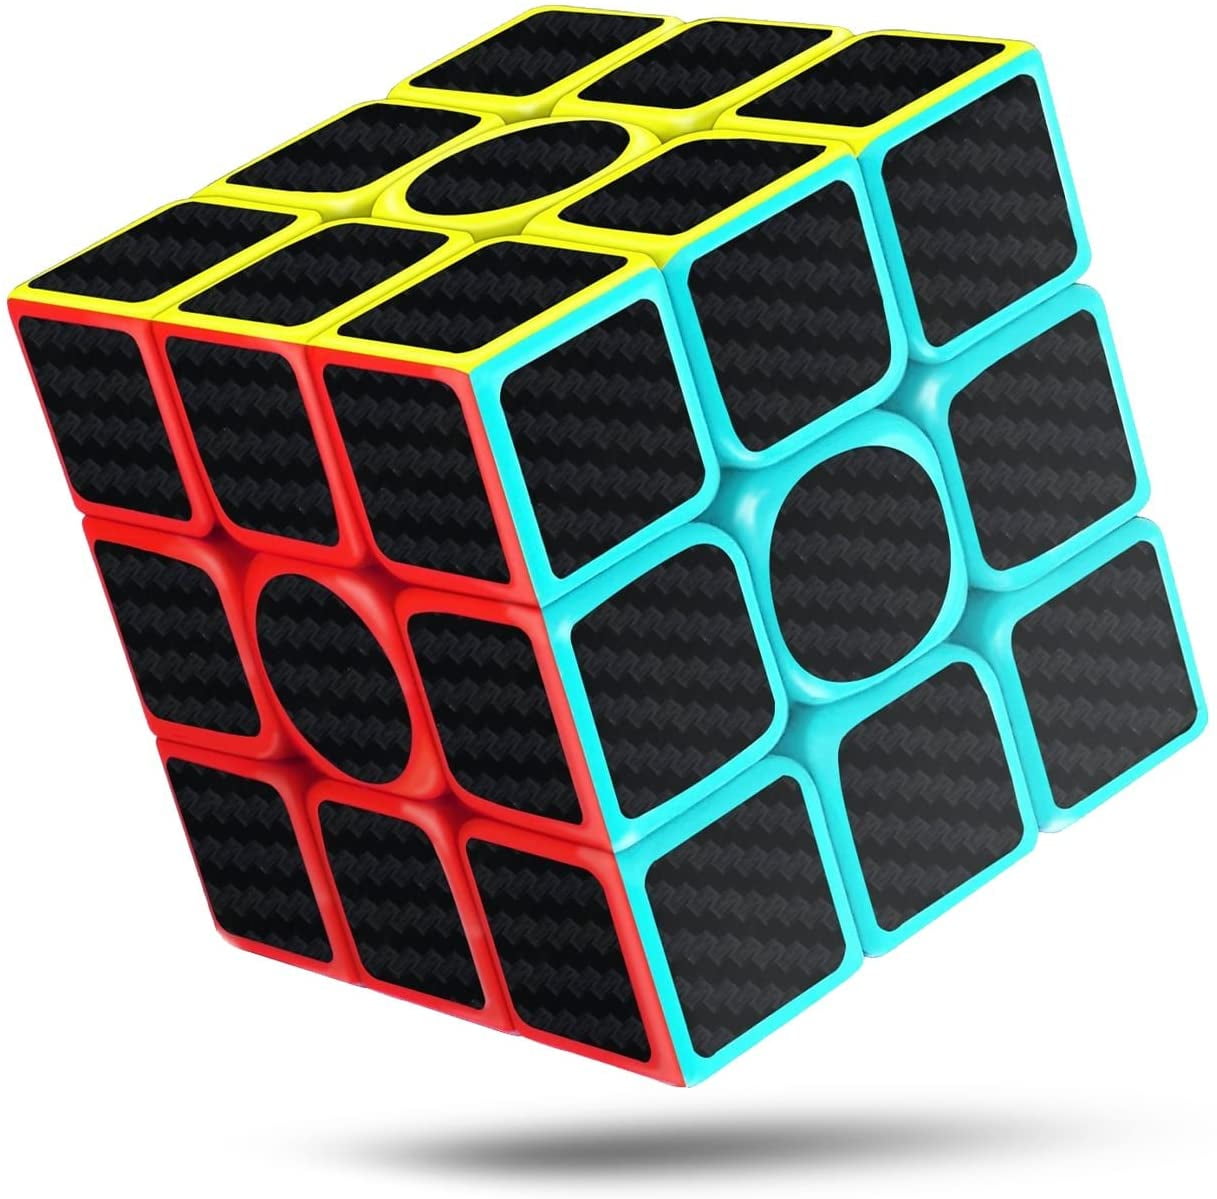 Smooth Speed Cube Puzzle Toy Rubix Game Rubik Megaminx 3x3 Style Cubix New 